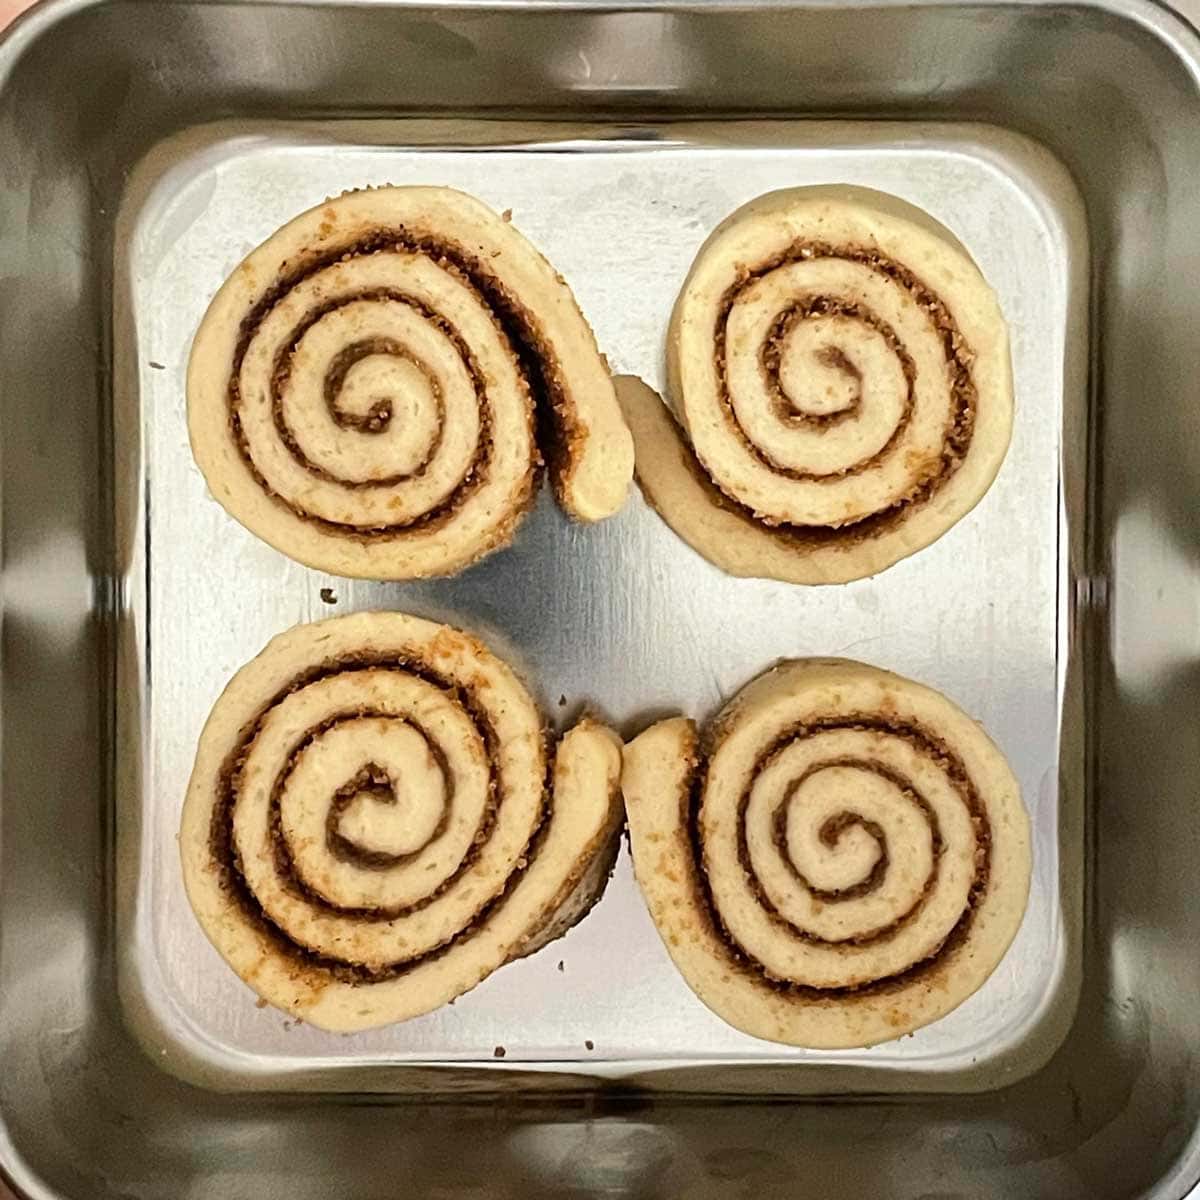 Cinnamon rolls in pan for rising.